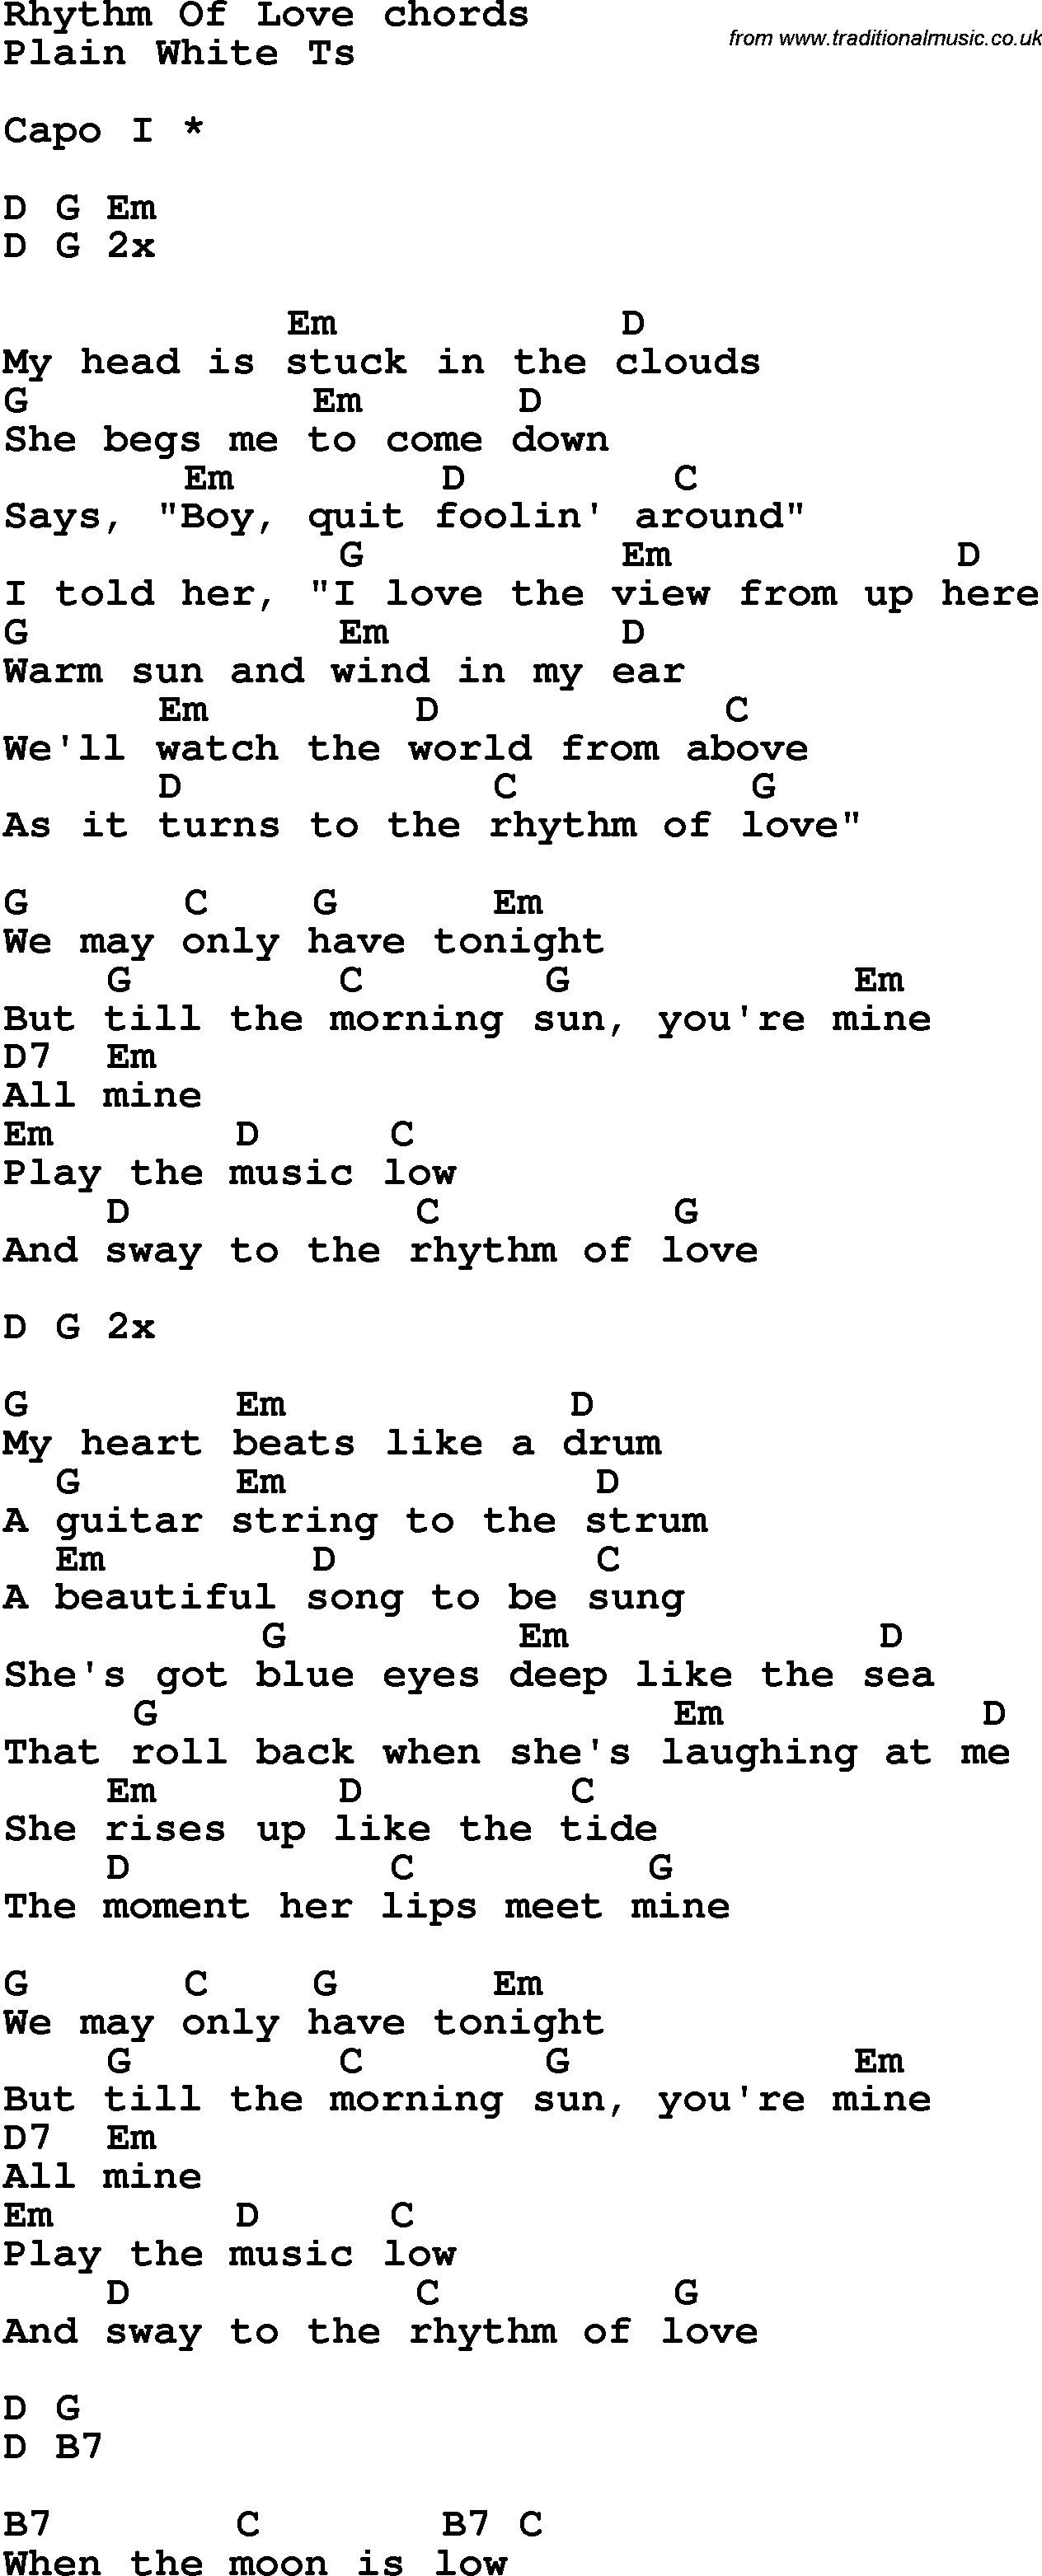 Song Lyrics with guitar chords for Rhythm Of Love